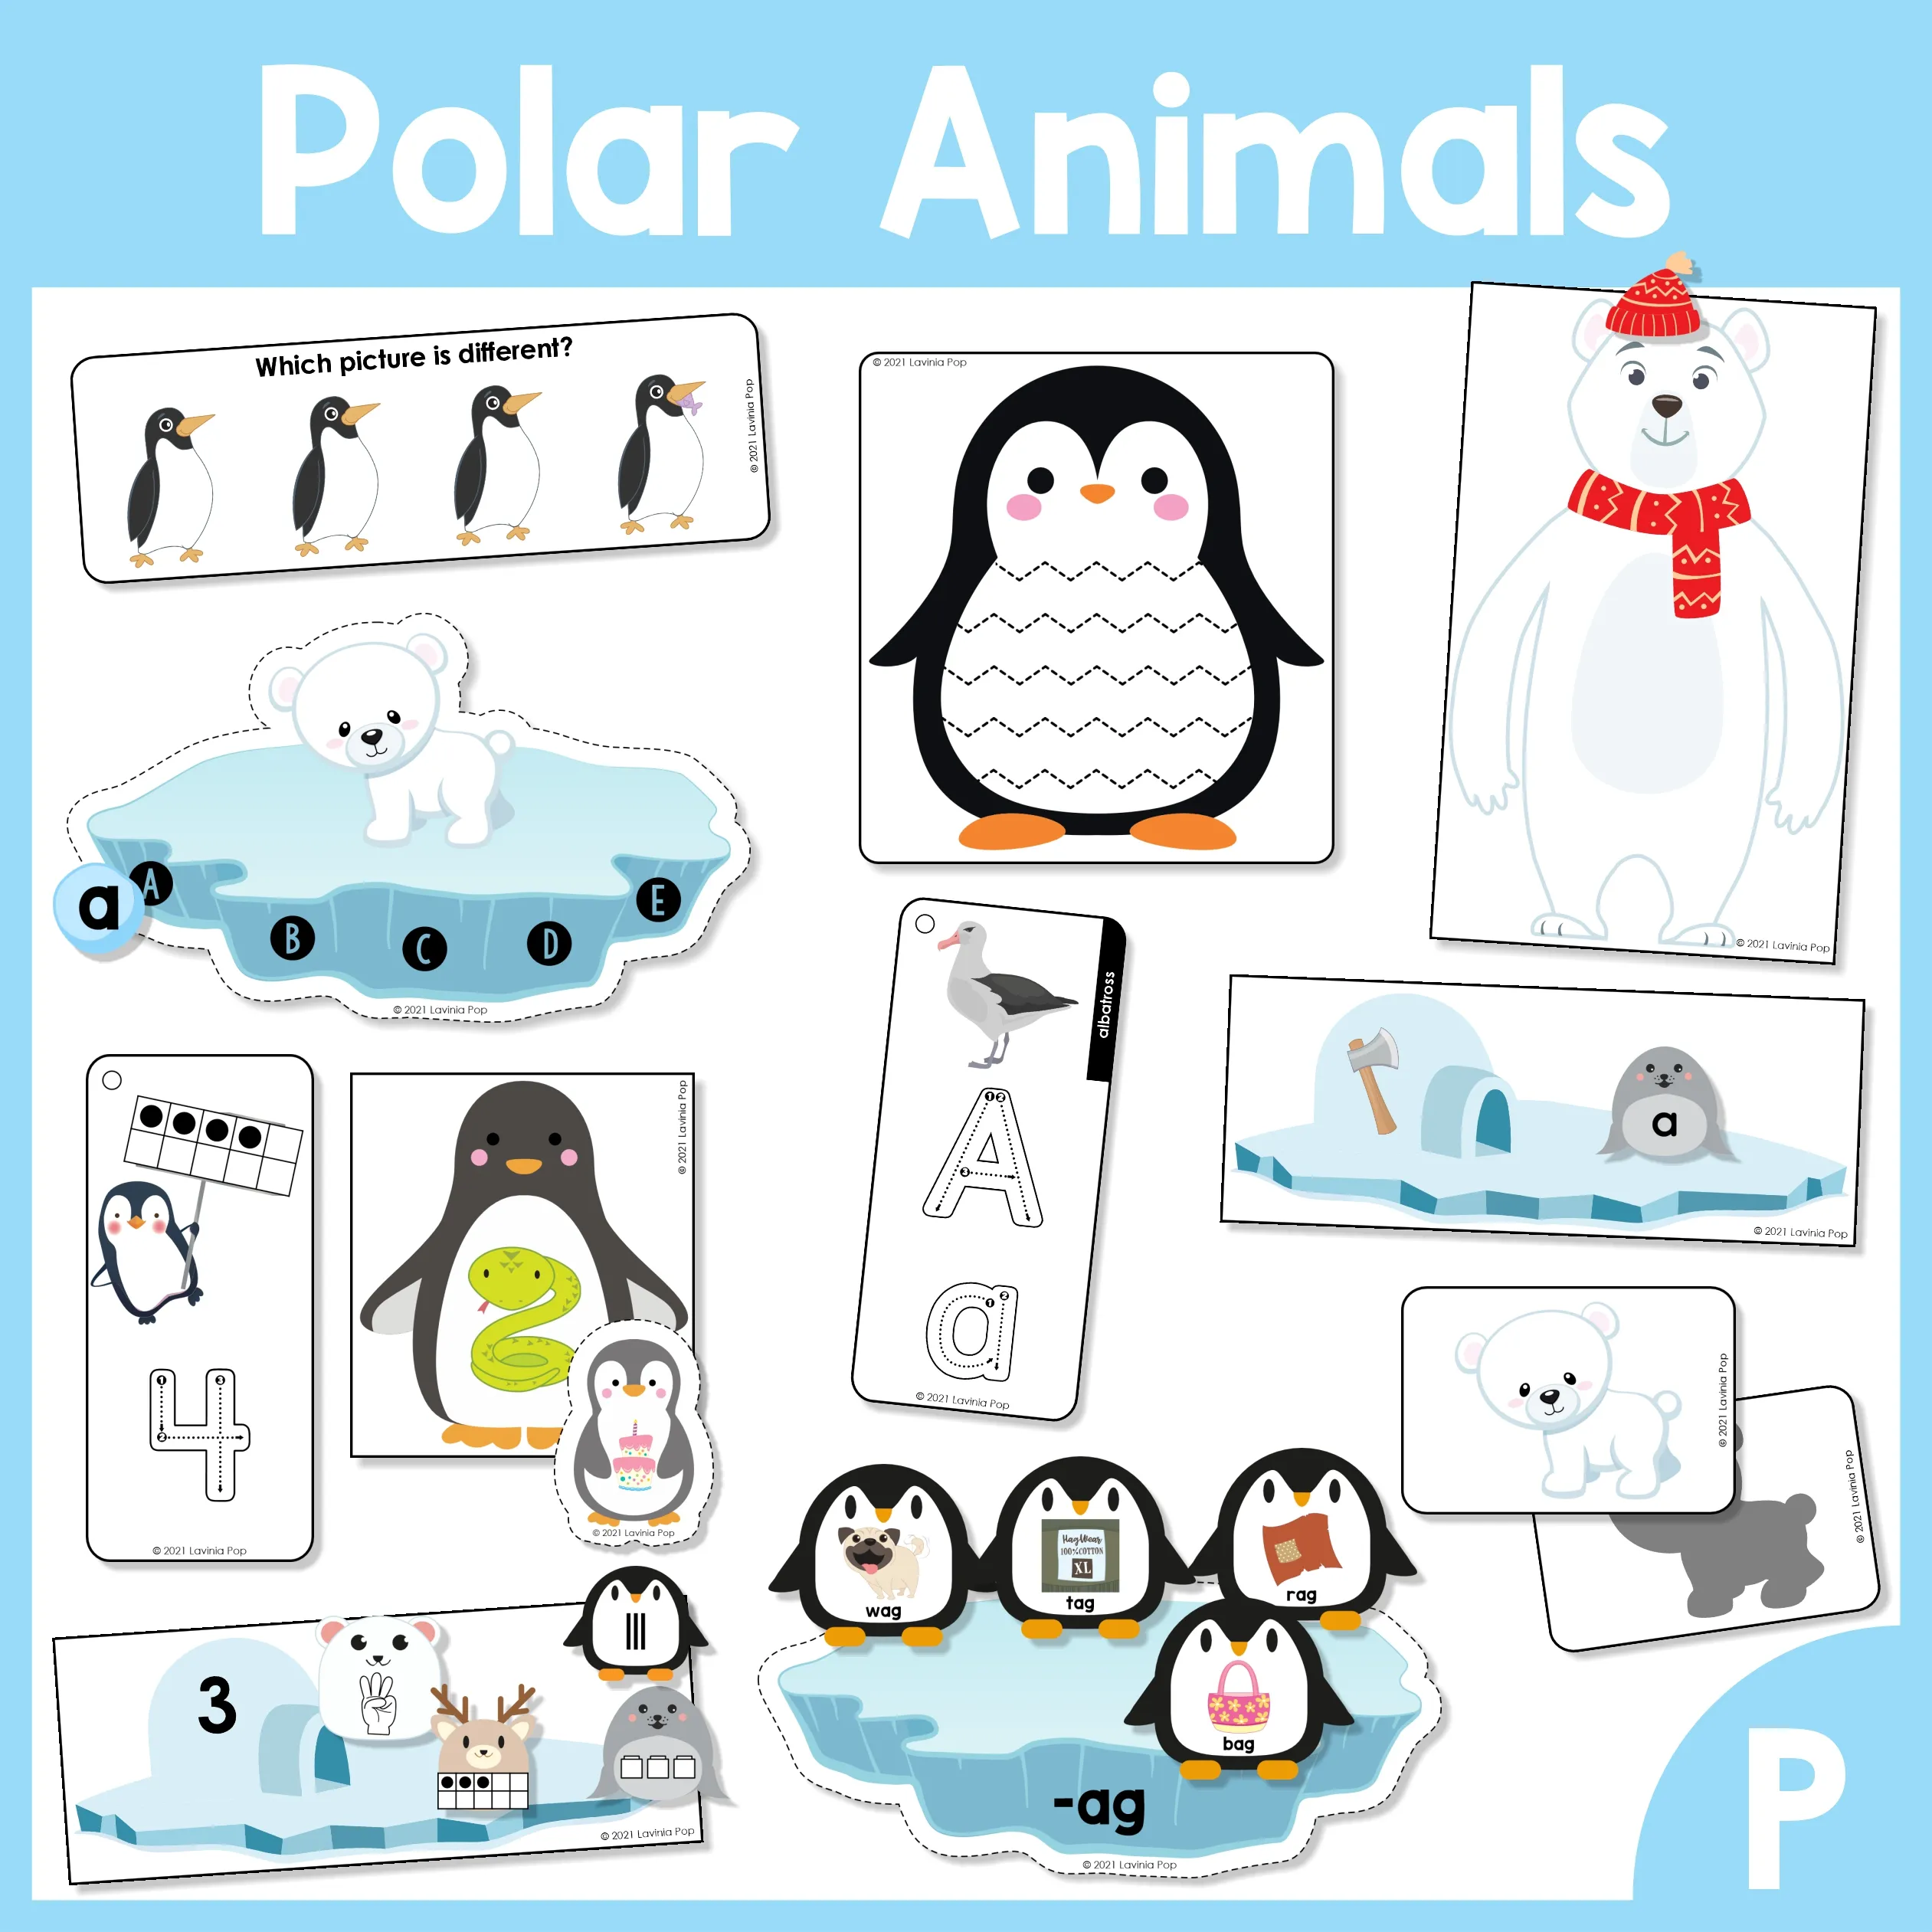 15 Free Arctic Animals Preschool Printables  Arctic animals preschool, Arctic  animals preschool activities, Arctic animals preschool printables